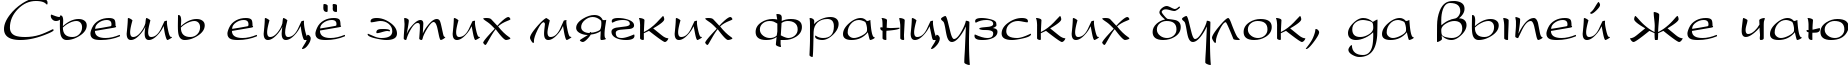 Пример написания шрифтом Oskord текста на русском